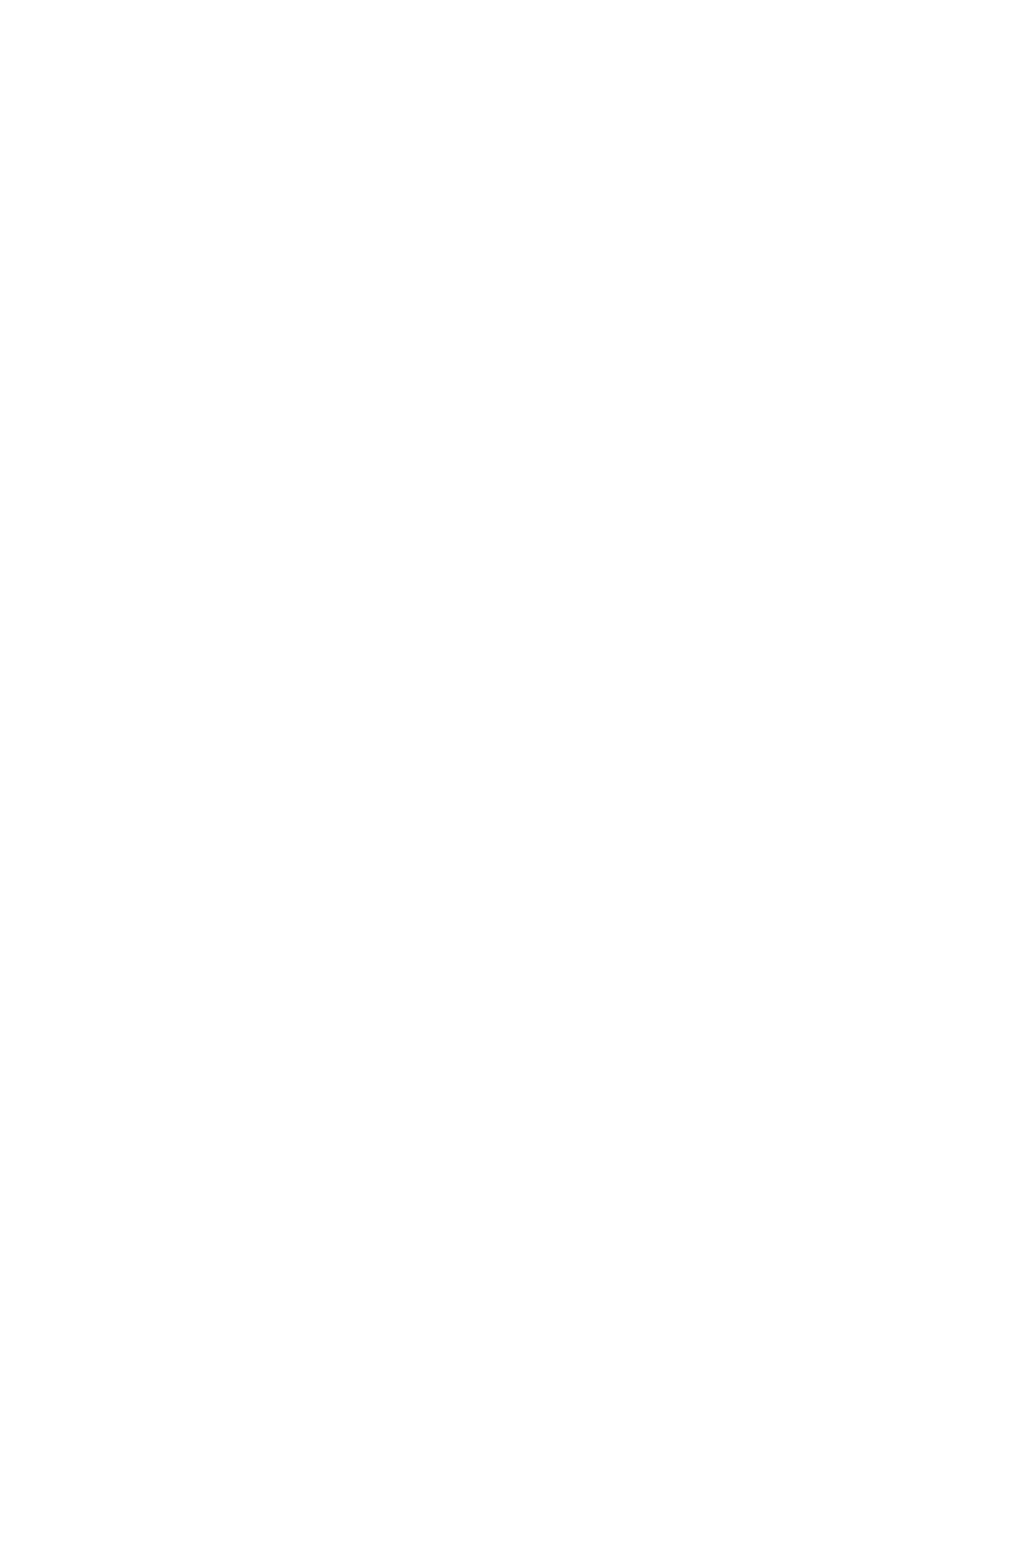 UnipolSai Assicurazioni logo for dark backgrounds (transparent PNG)